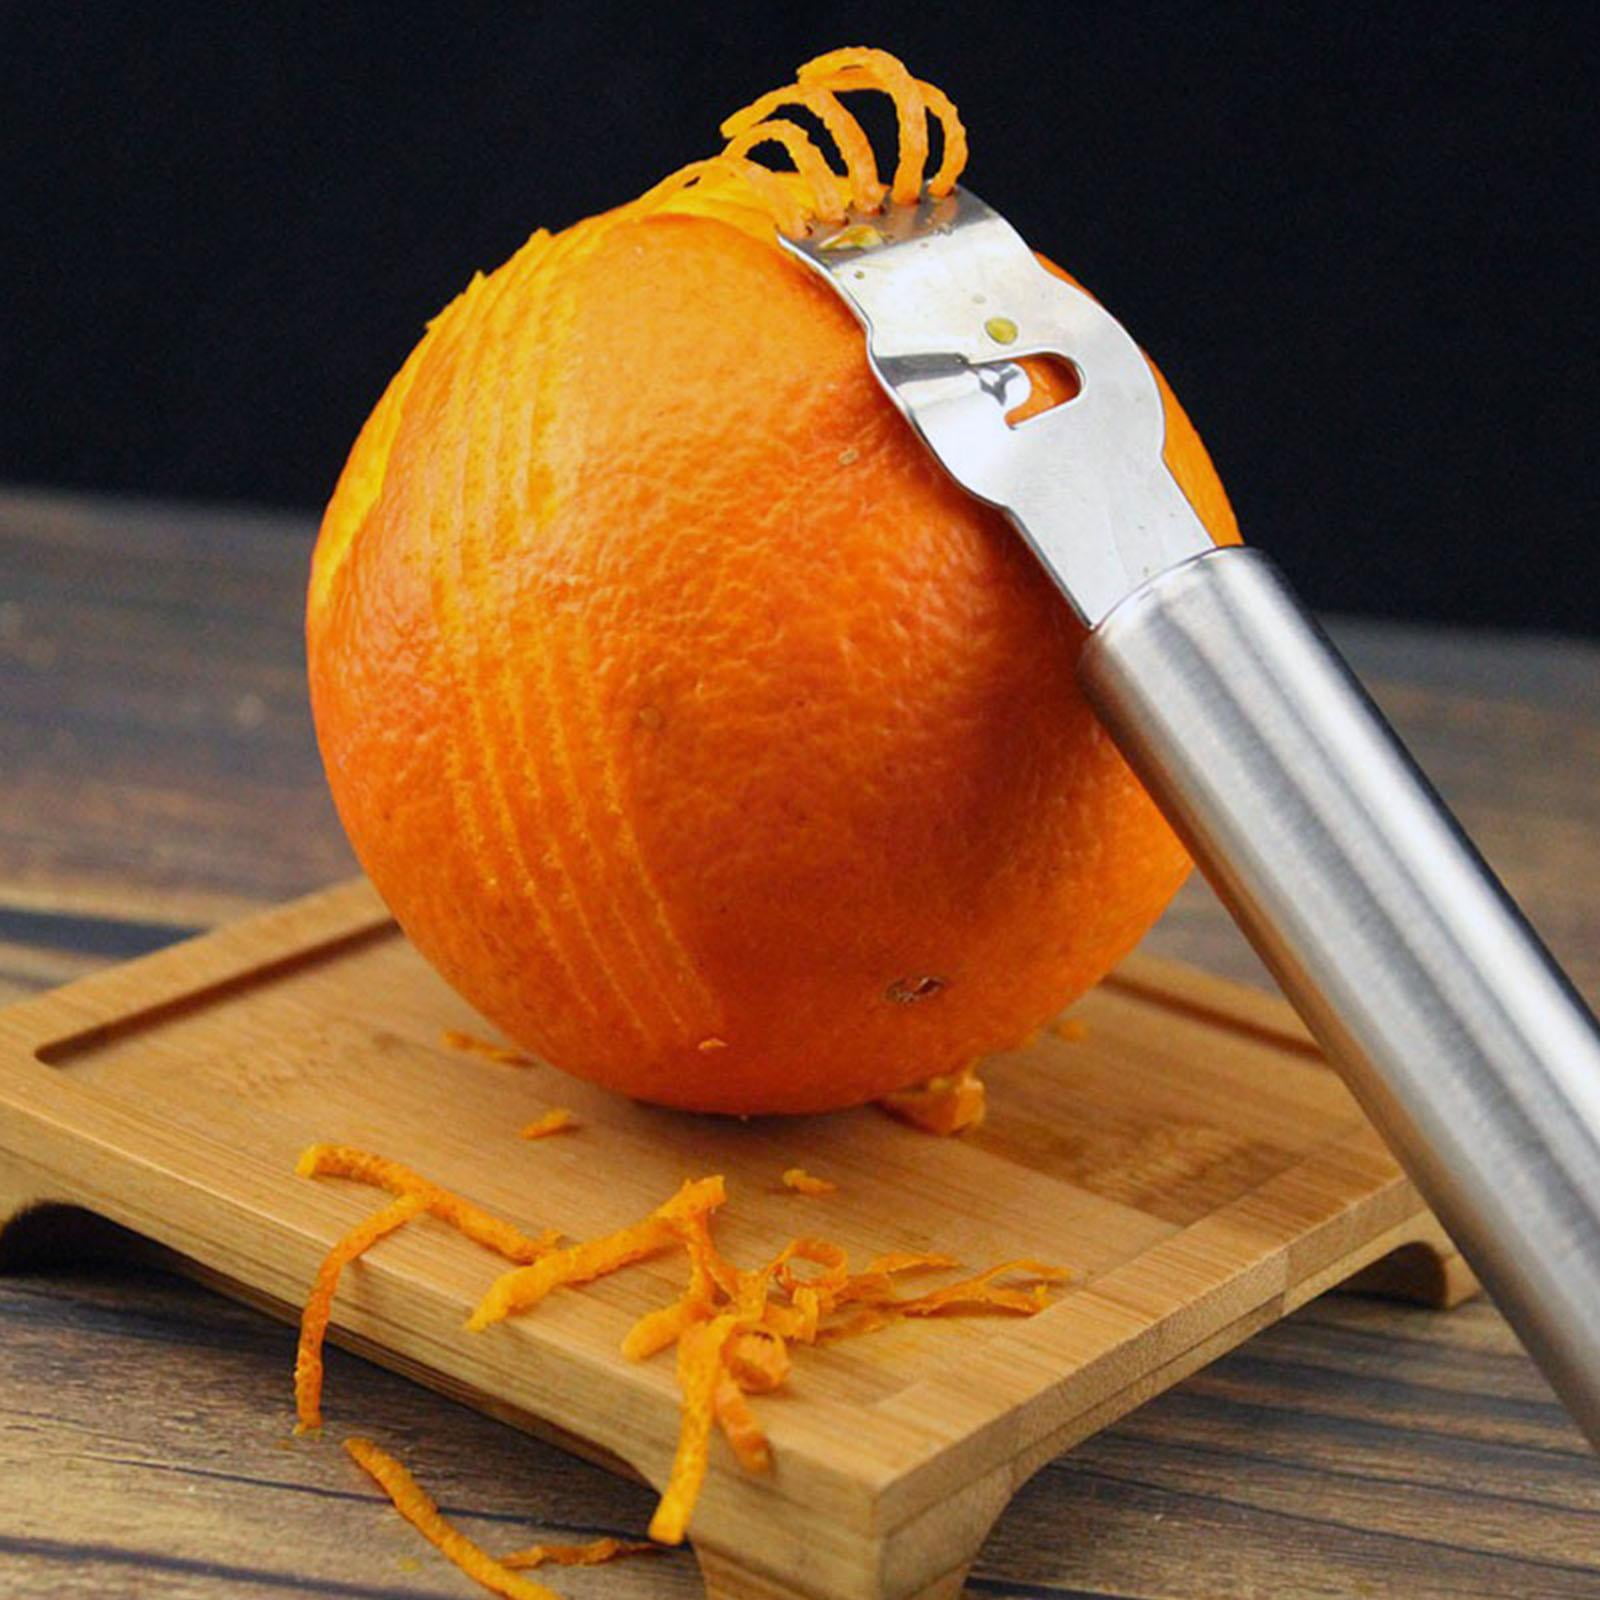 Frcolor Multi-use Stainless Steel Orange Slicer Peeler Orange